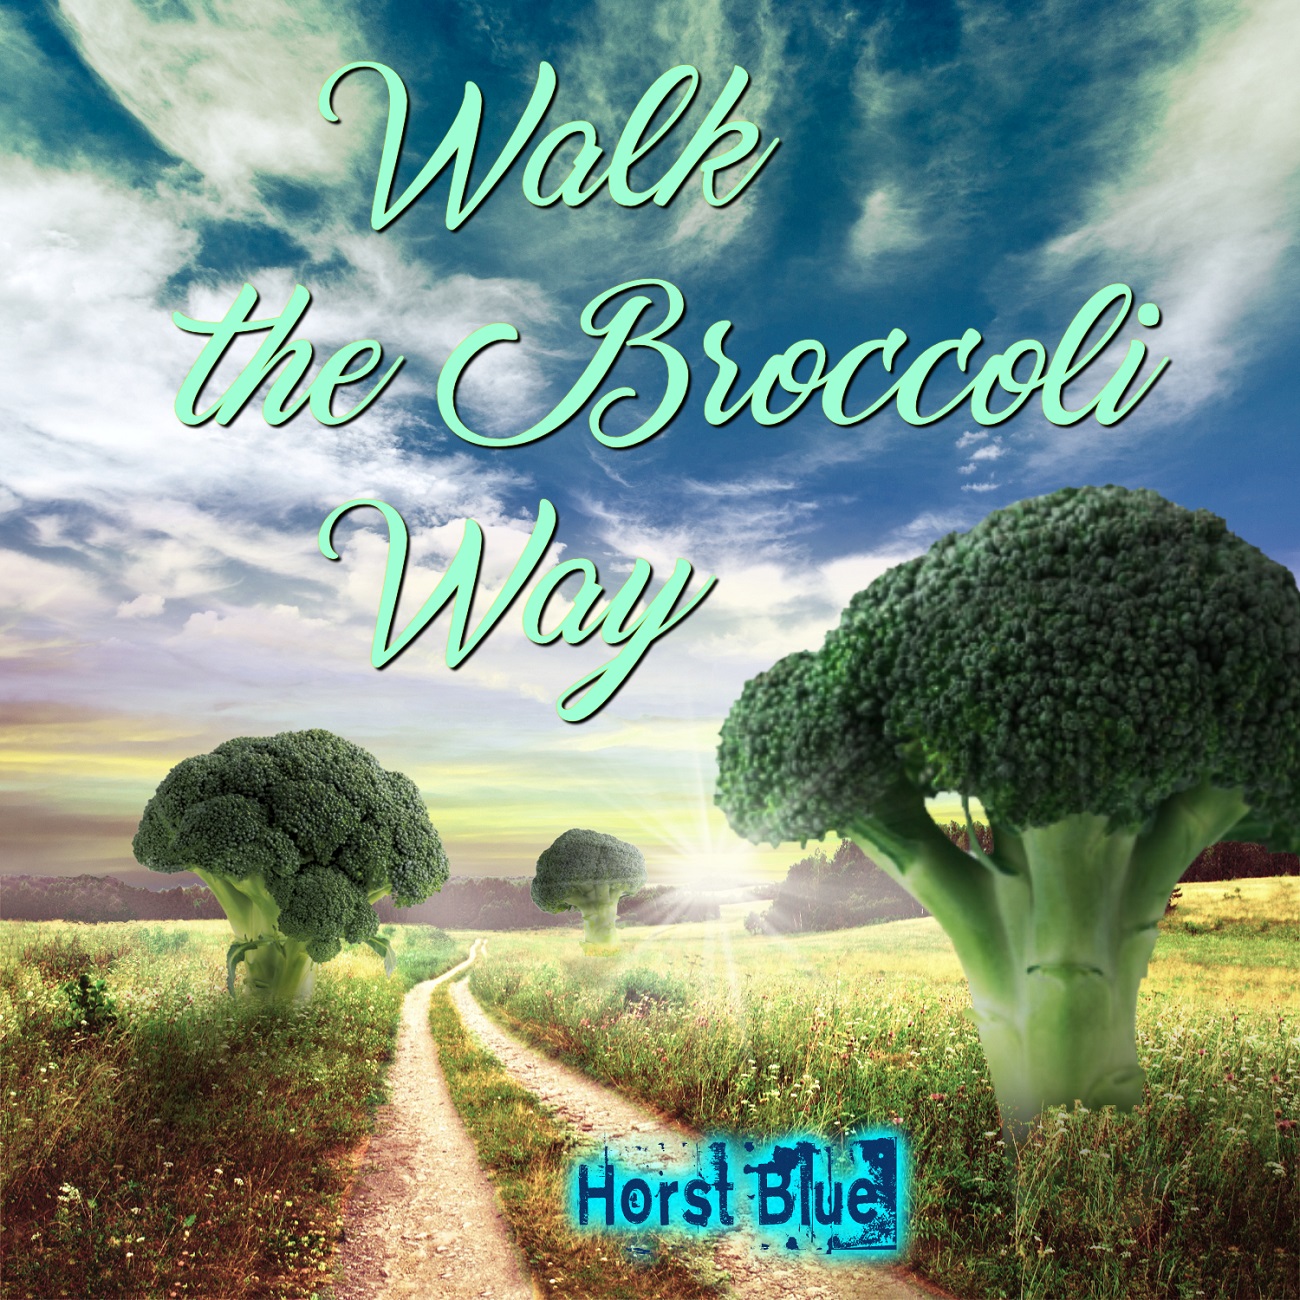 Horst Blue - Walk the broccoli way - Cover.jpg